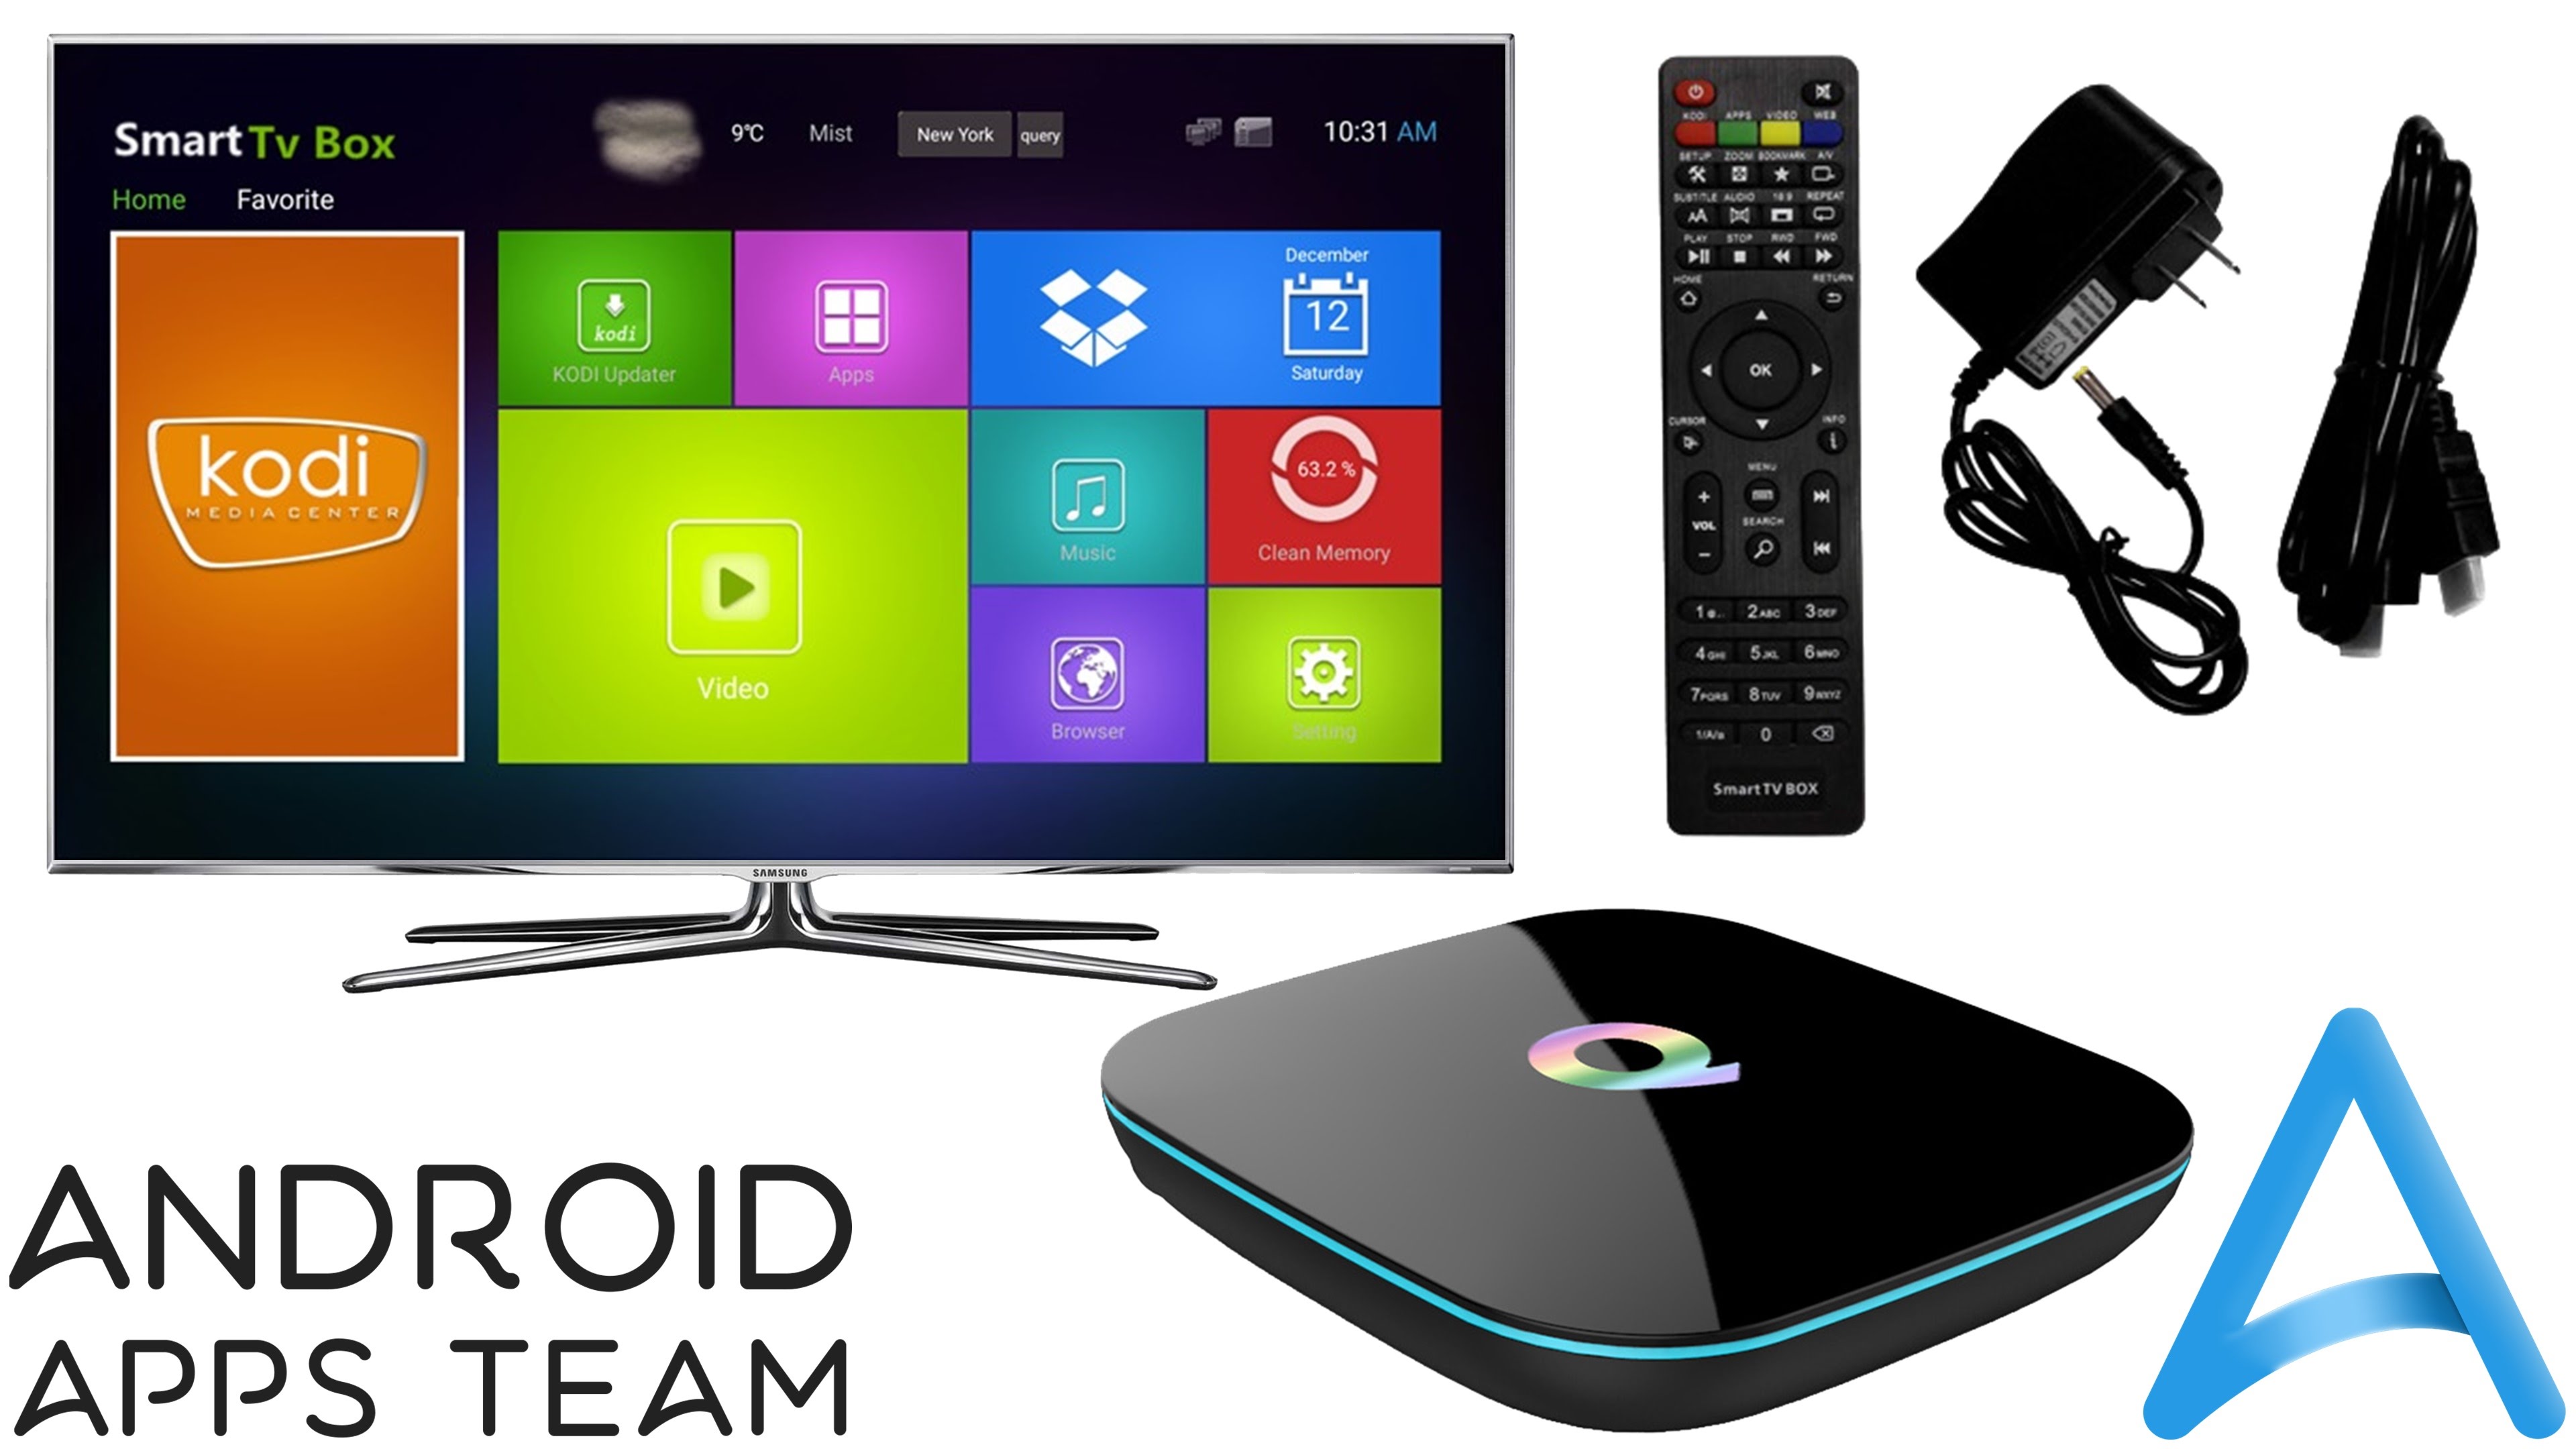 Смарт приставка для цифрового тв. Смарт ТВ q100w. Smart Box TV q1 Mini. Платформа Smart TV: Android TV a75lu6500. TV Box андроид приставка.